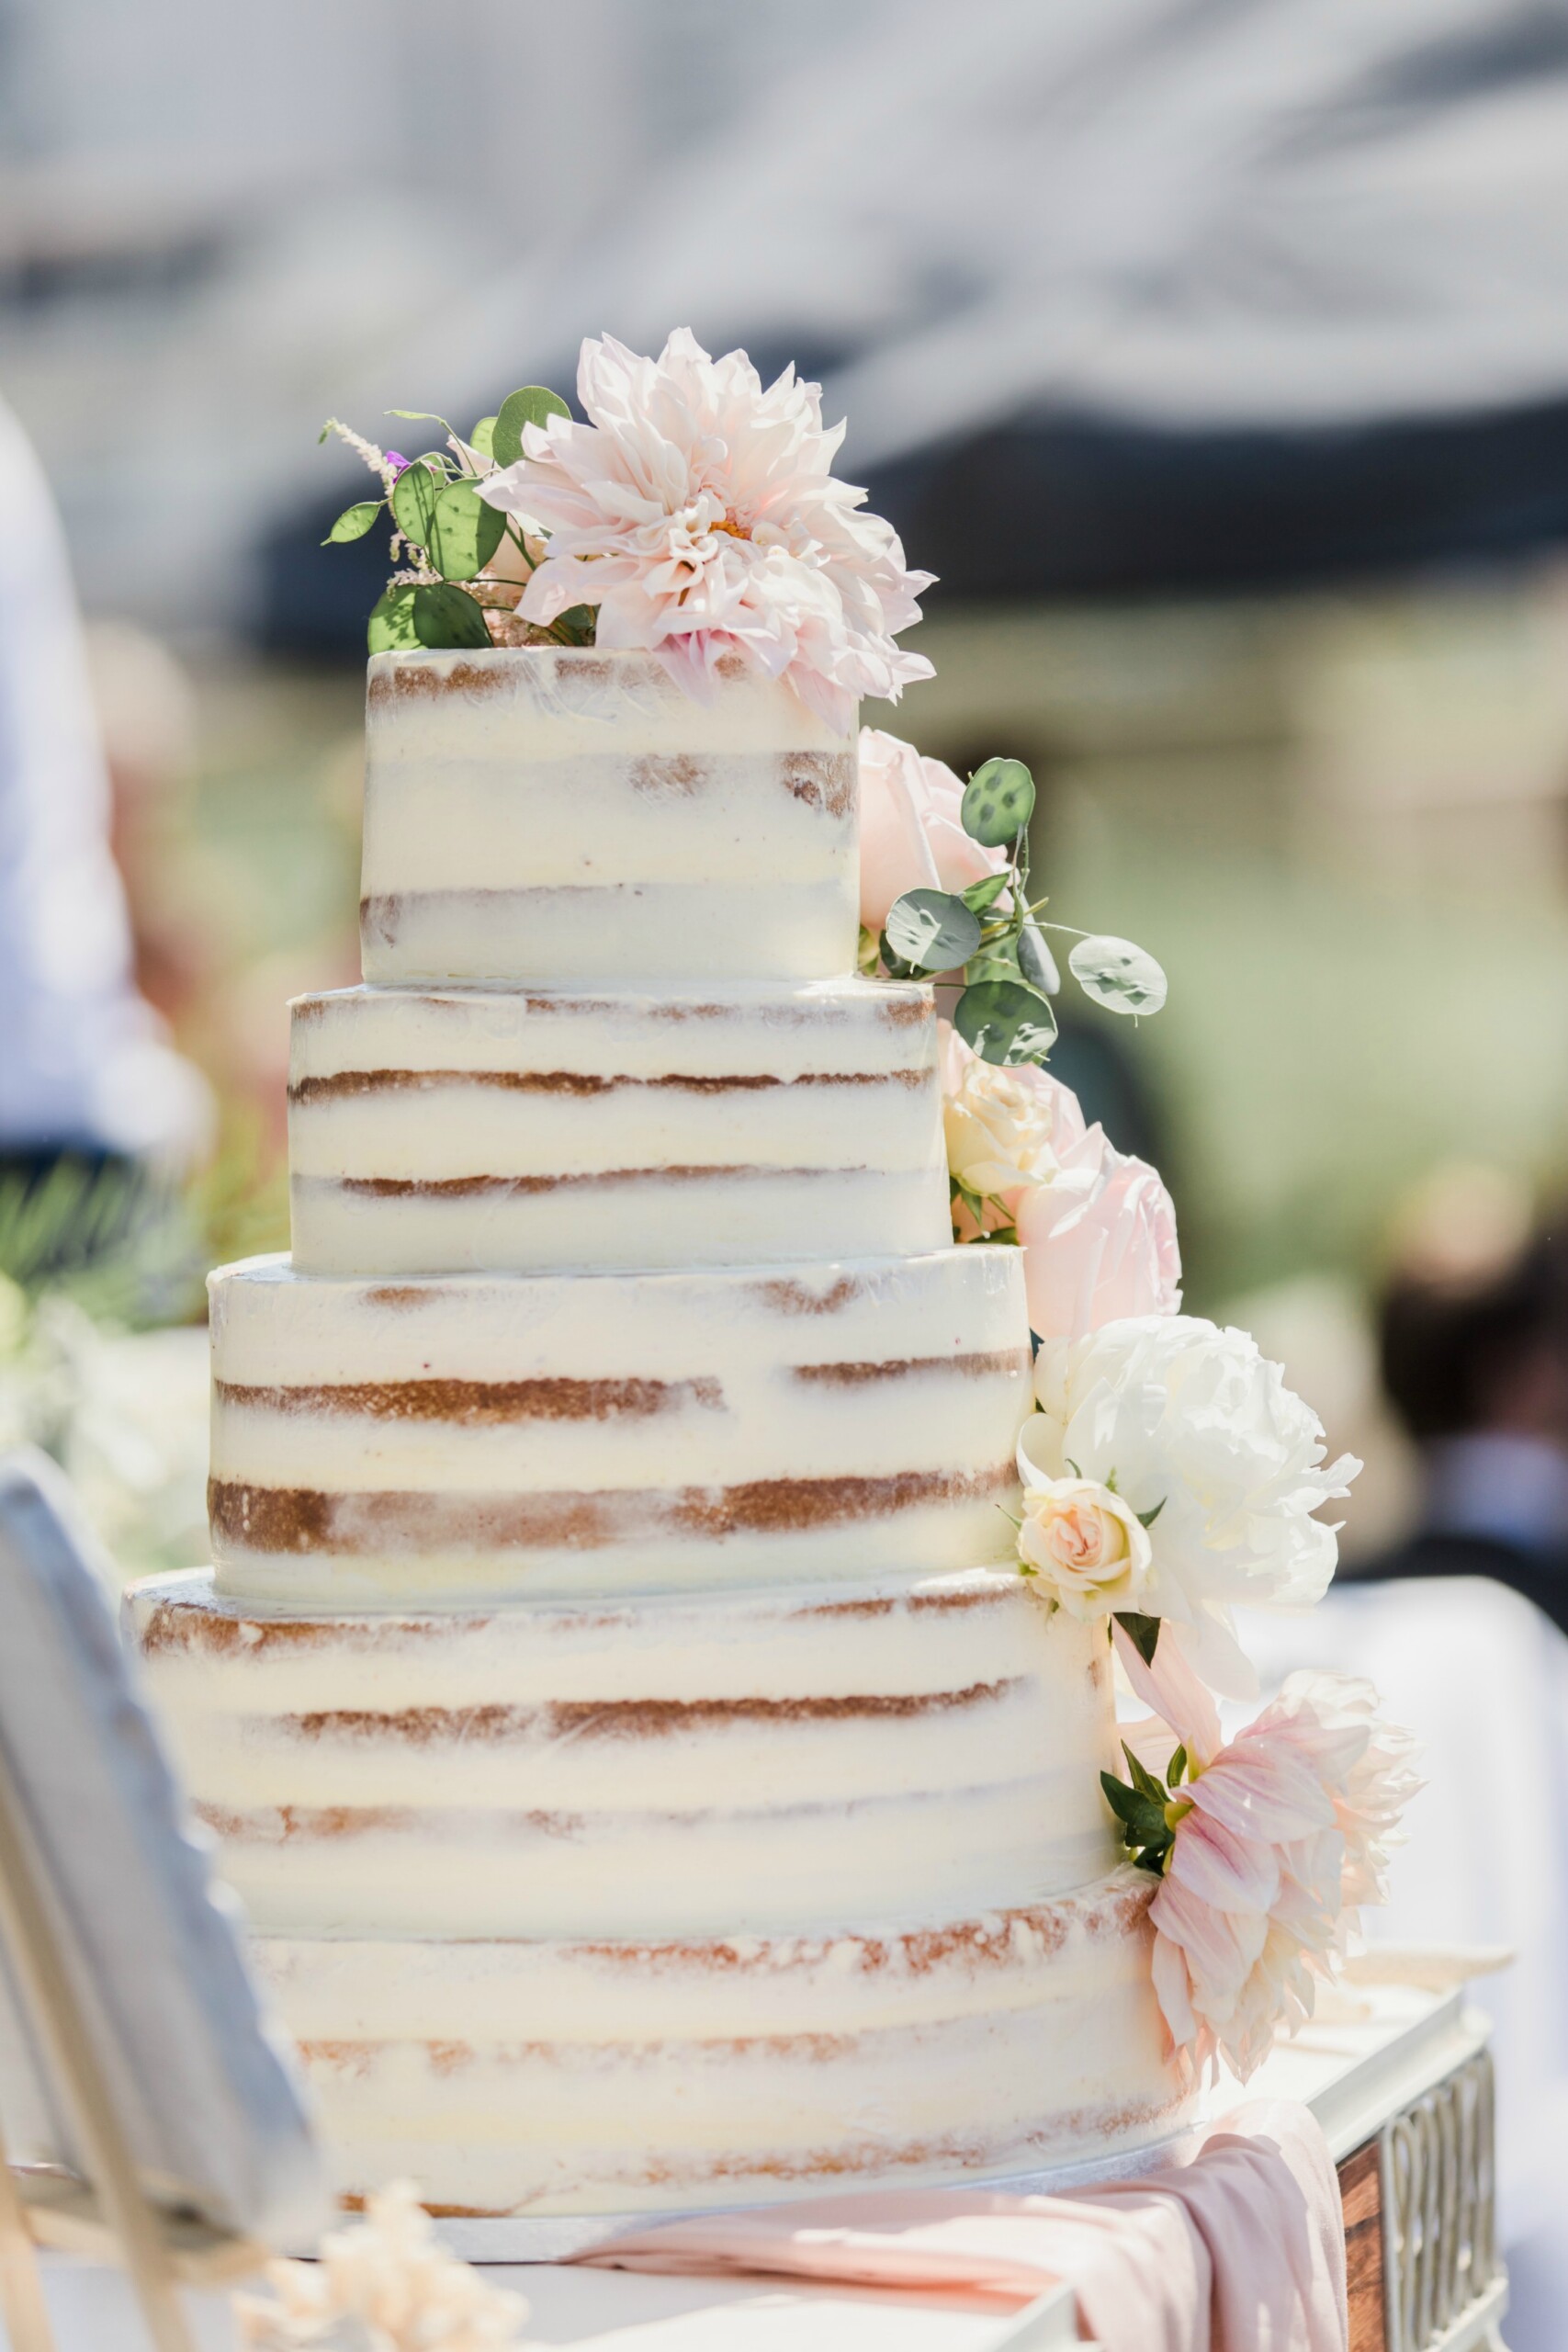 seminaked-naked-cake, rustic-seminaked-wedding-cake, bruidstaart-rustic-oudroze